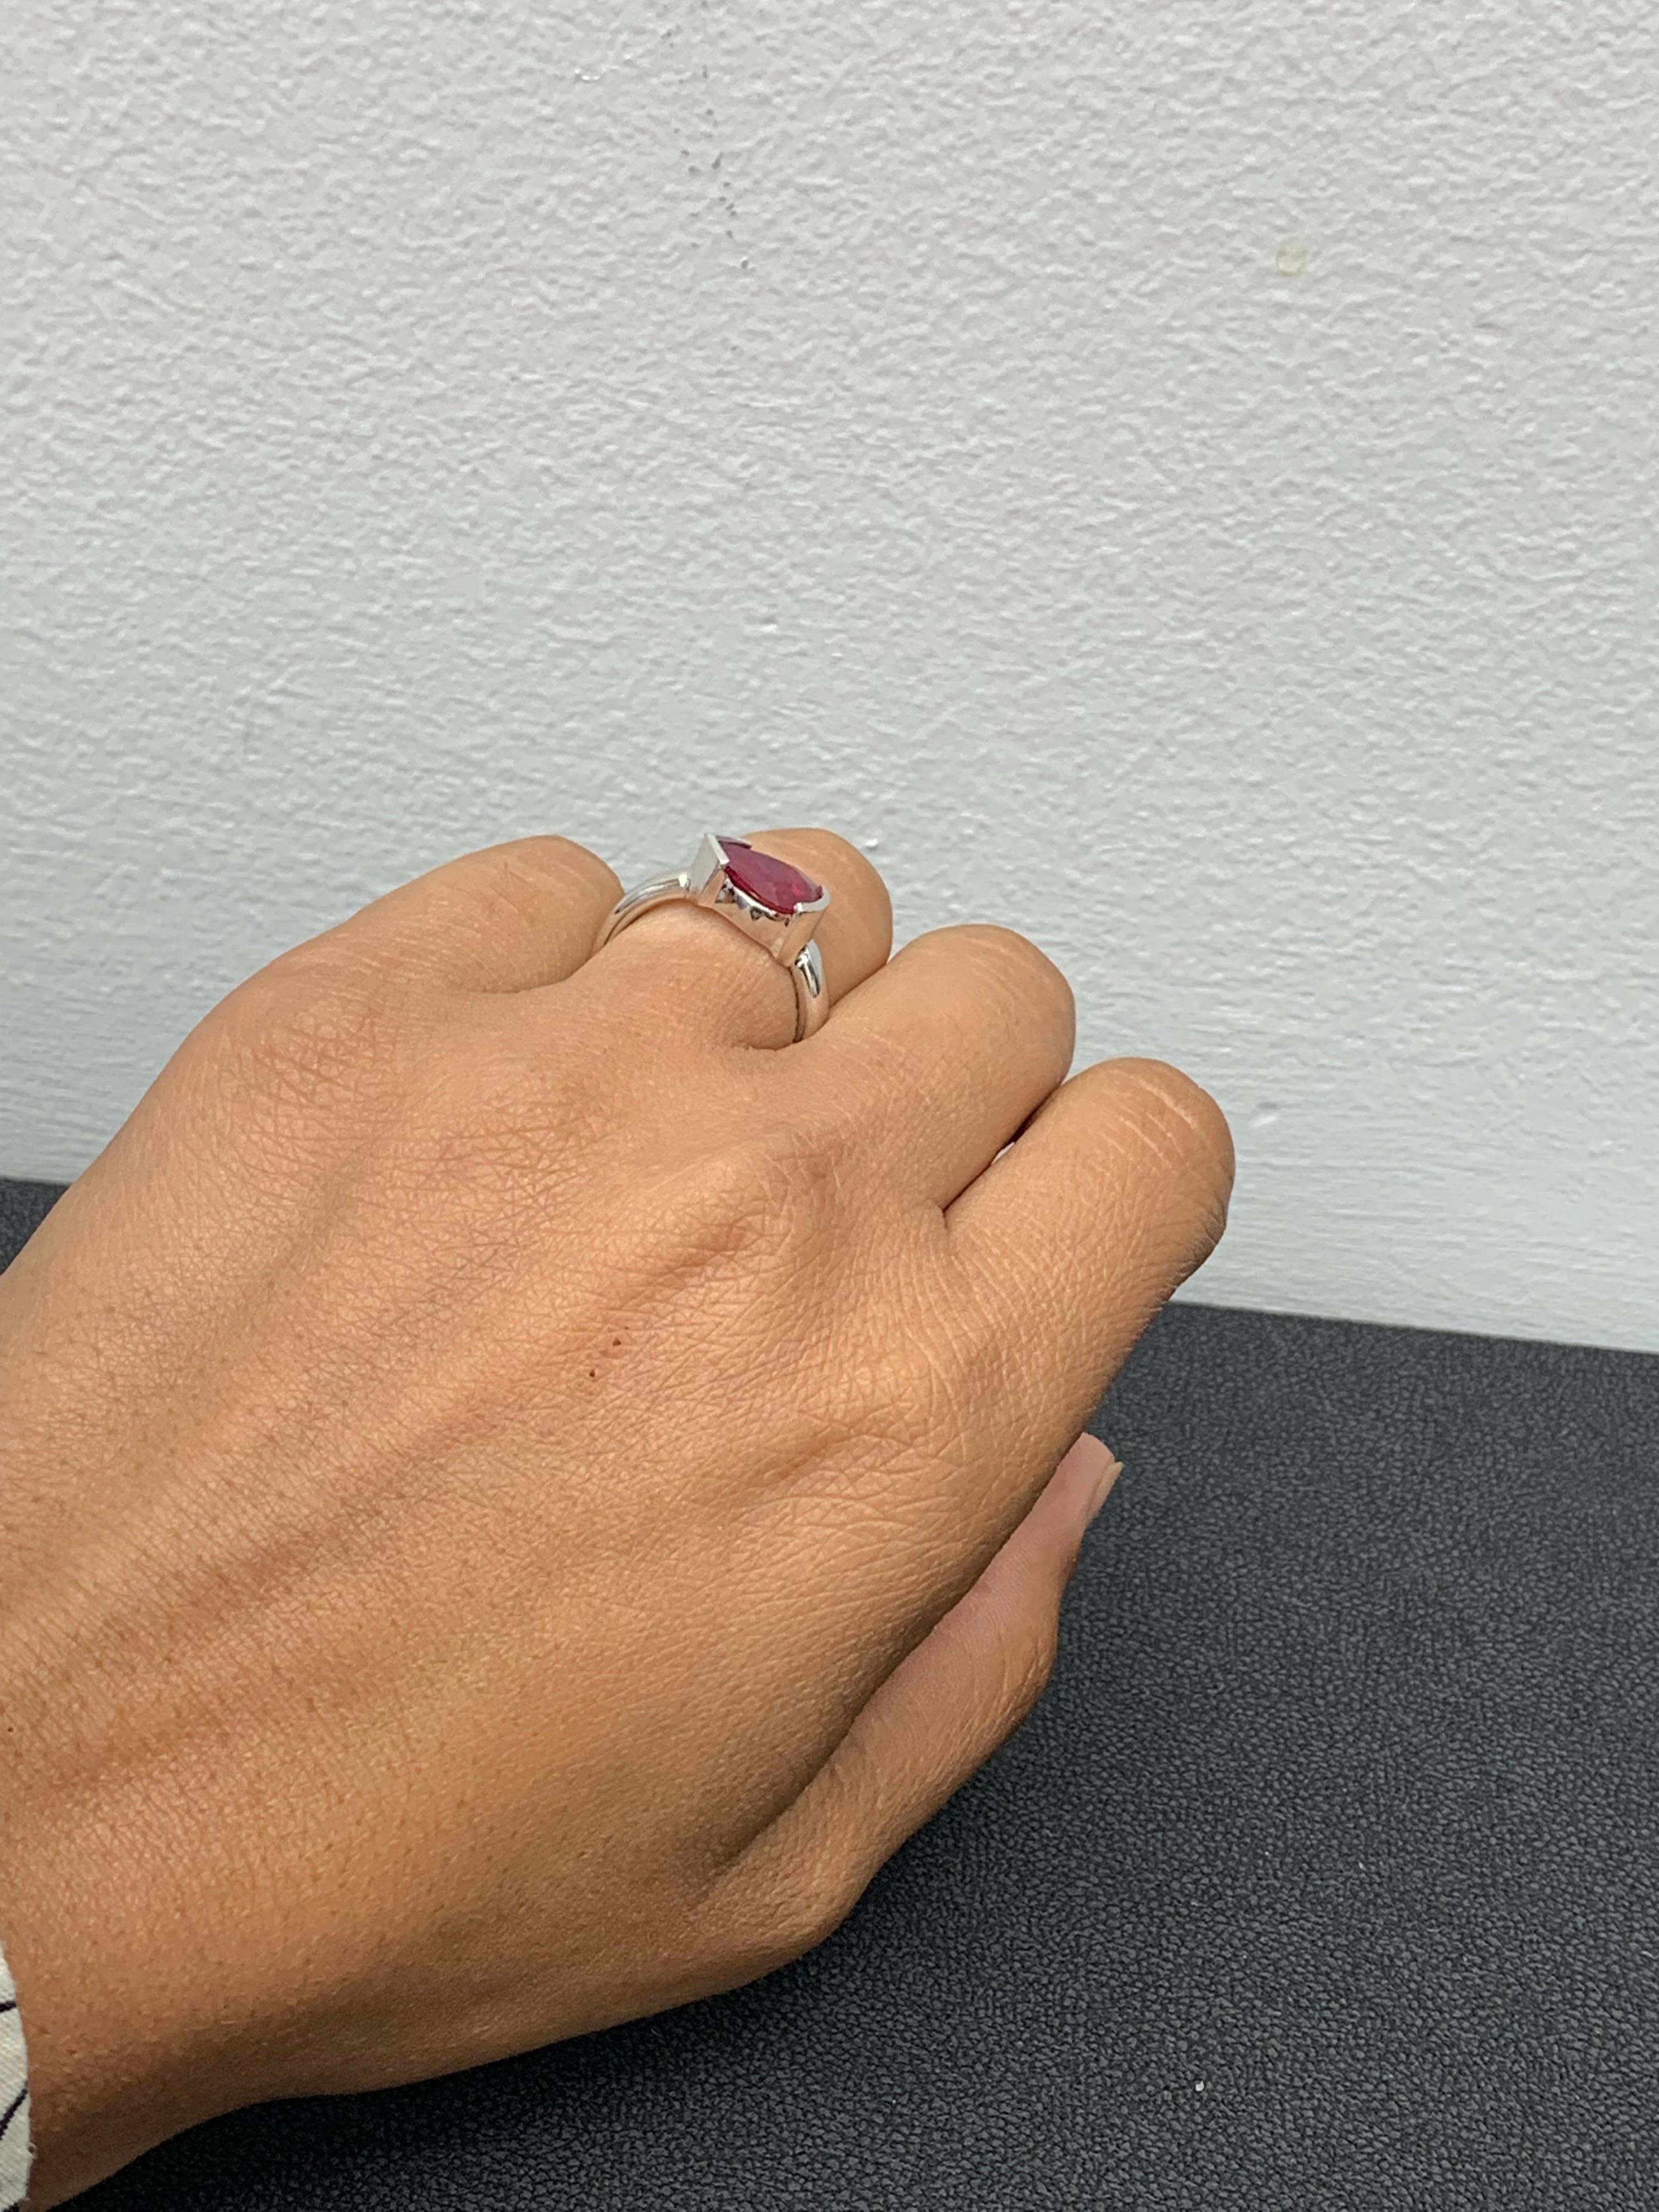 Women's 1.85 Carat Pear shape Ruby Ring in 14k White Gold For Sale